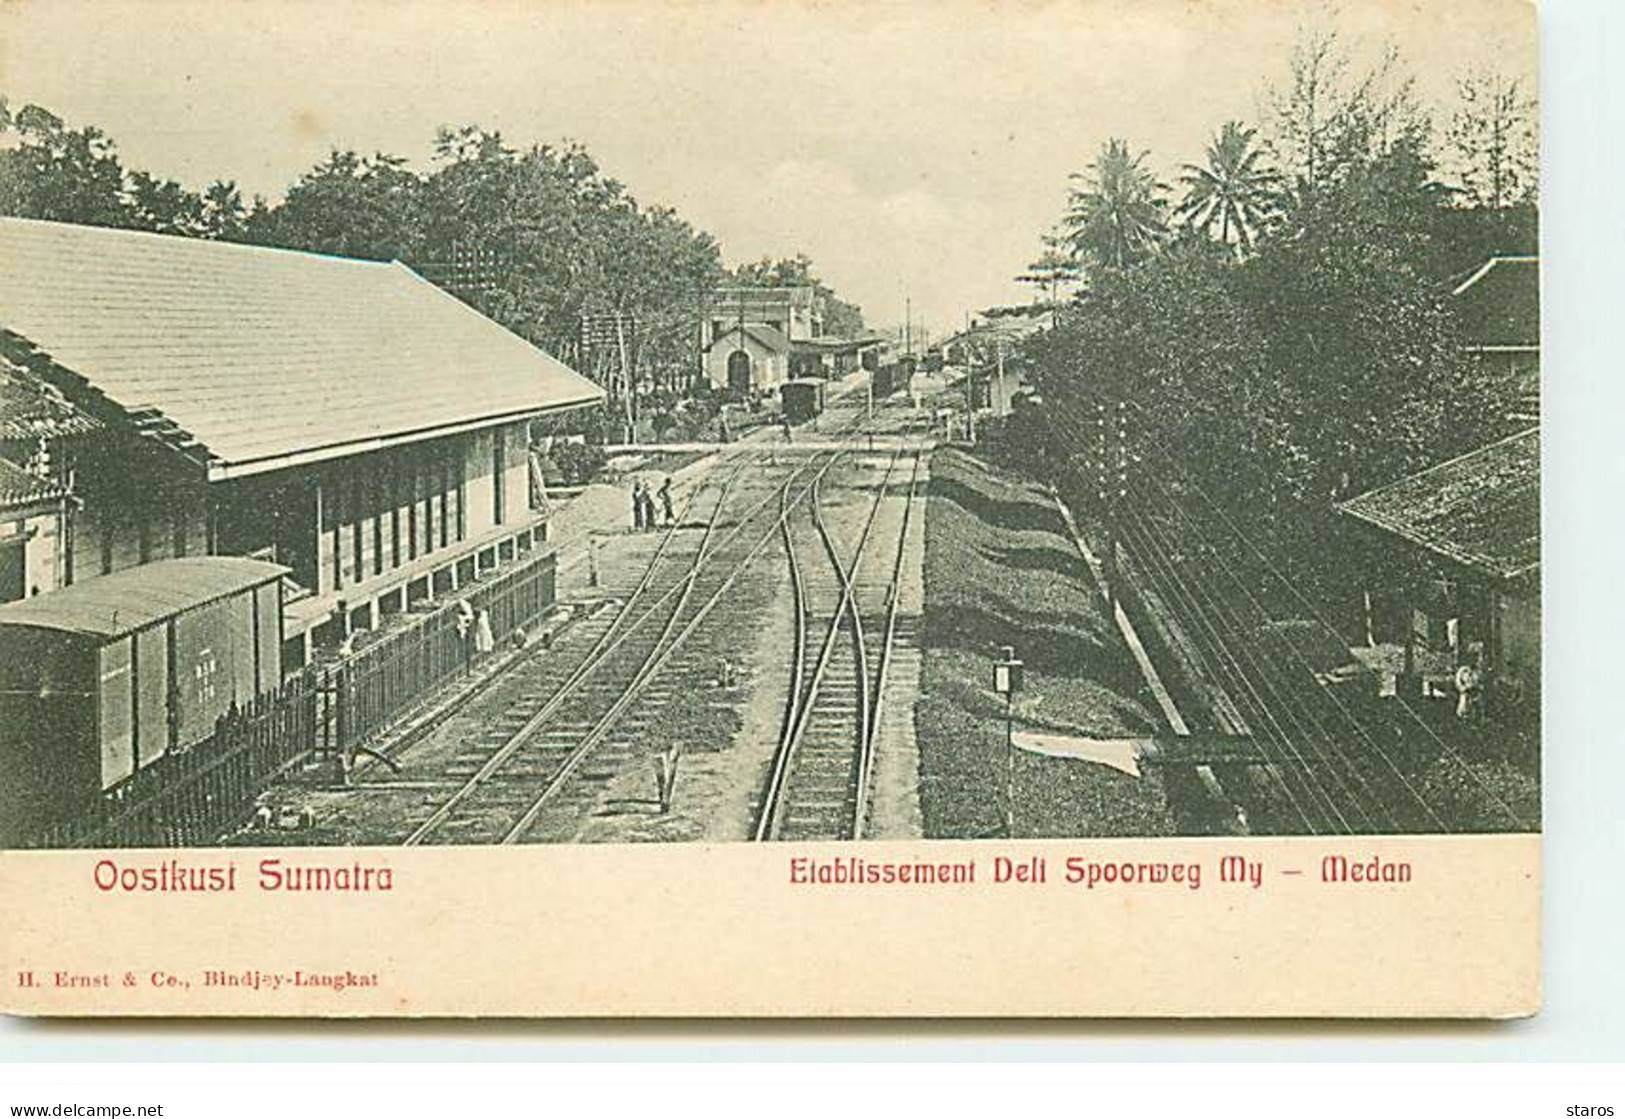 Indonésie - Oostkust Sumatra - Etablissement Deli Spoorweg My - Medan - Bahnhof - Gare - Indonesia